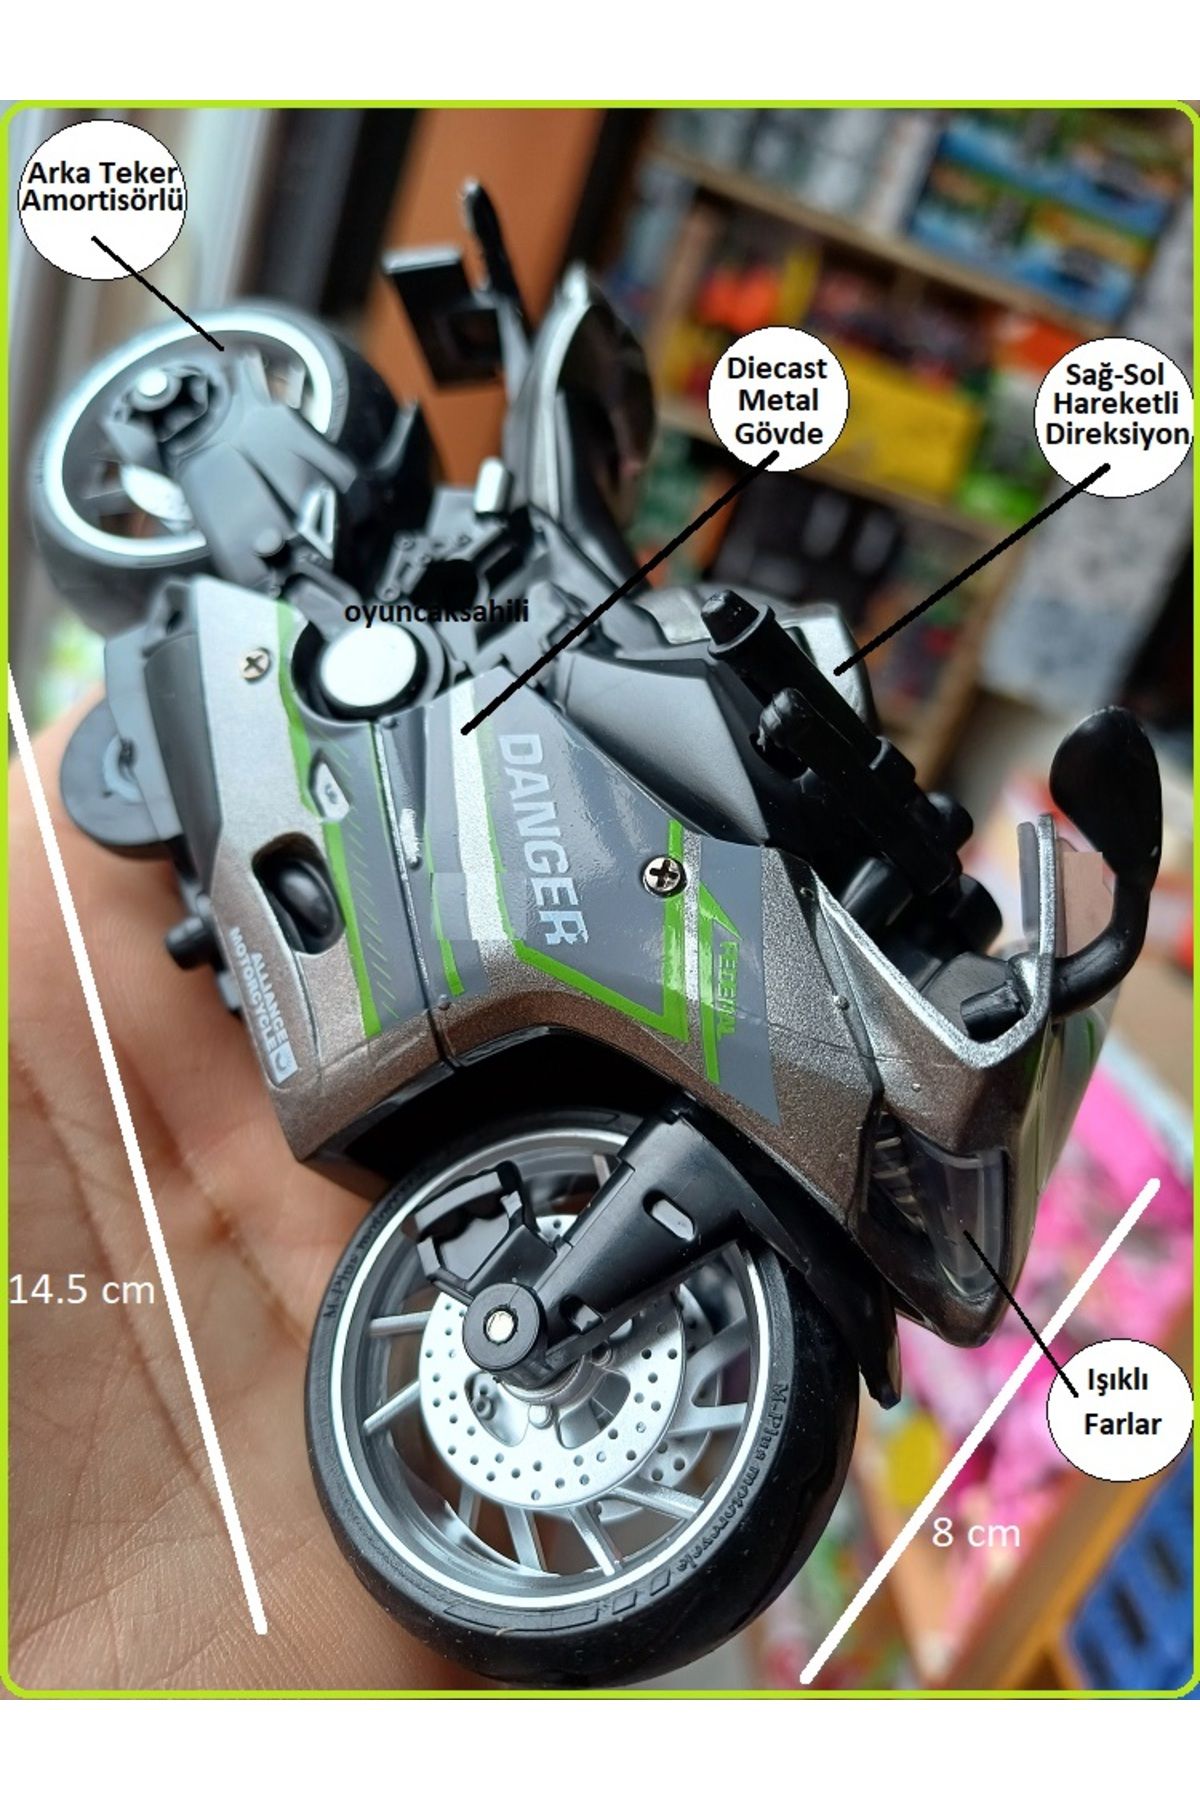 OYUNCAKSAHİLİ Motor Kawasaki H2R ZX-10R Tarz Motorsiklet Metal ışık Ses Efekt Koleksiyon Model Oyuncak Motosiklet